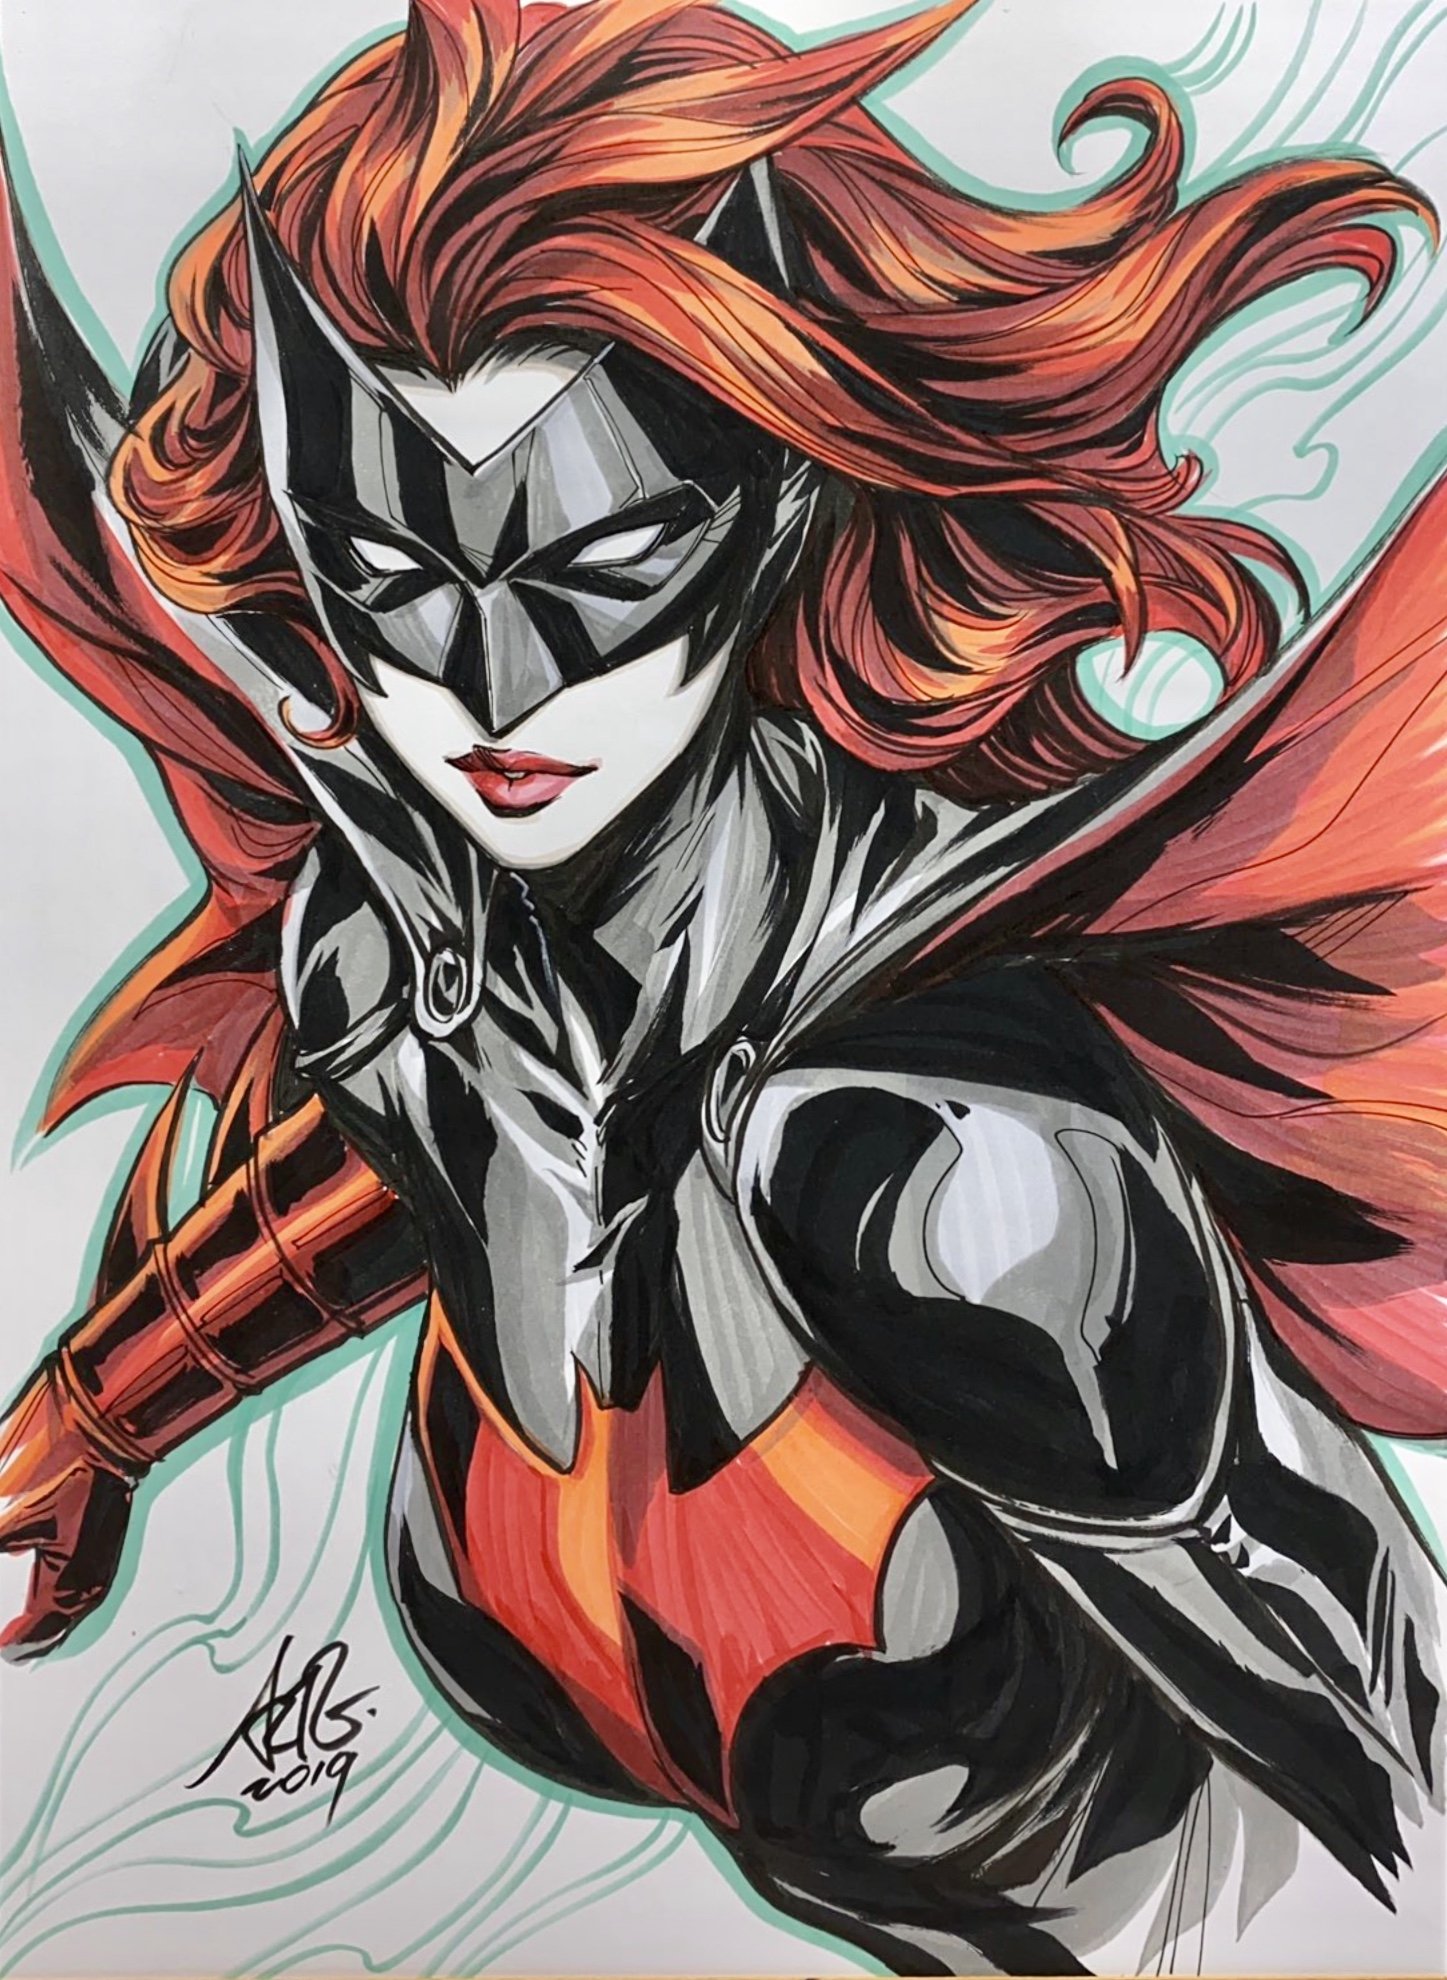 Batwoman Original Sketch Cover Of Ink And Brush 2019 Inktober Art Book Stanley Artgerm Lau In 3978